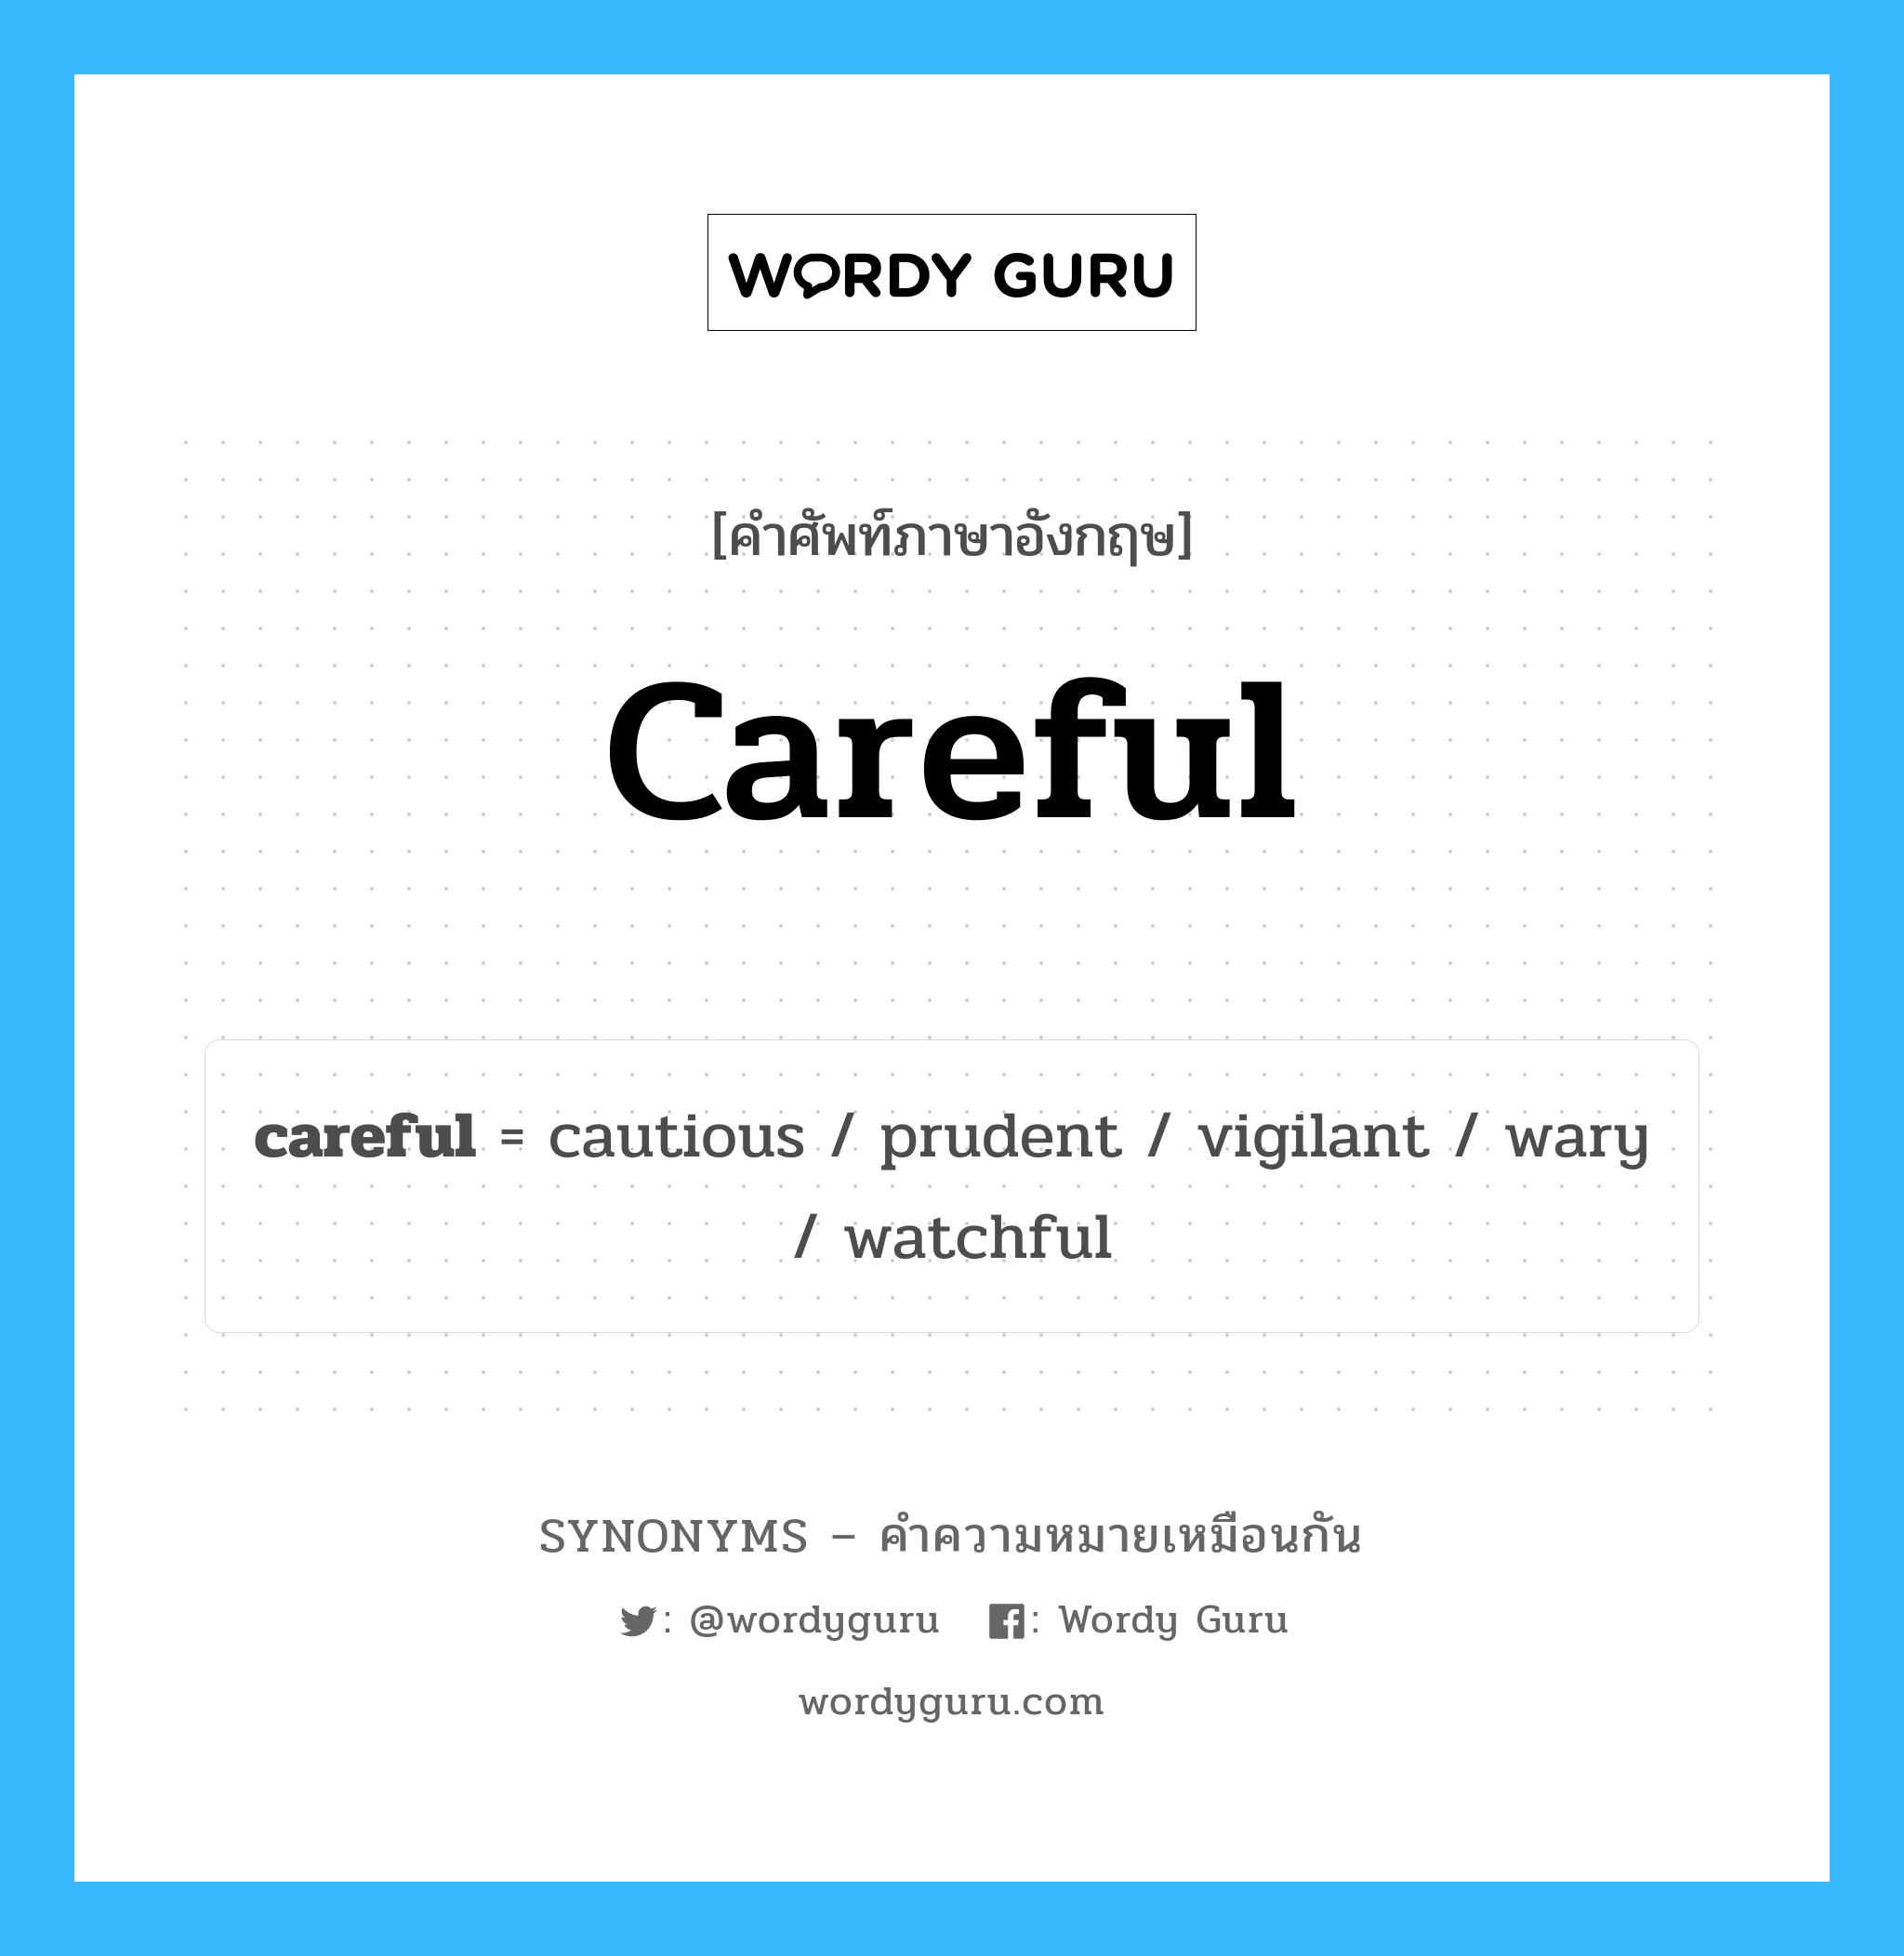 watchful เป็นหนึ่งใน careful และมีคำอื่น ๆ อีกดังนี้, คำศัพท์ภาษาอังกฤษ watchful ความหมายคล้ายกันกับ careful แปลว่า จับ หมวด careful